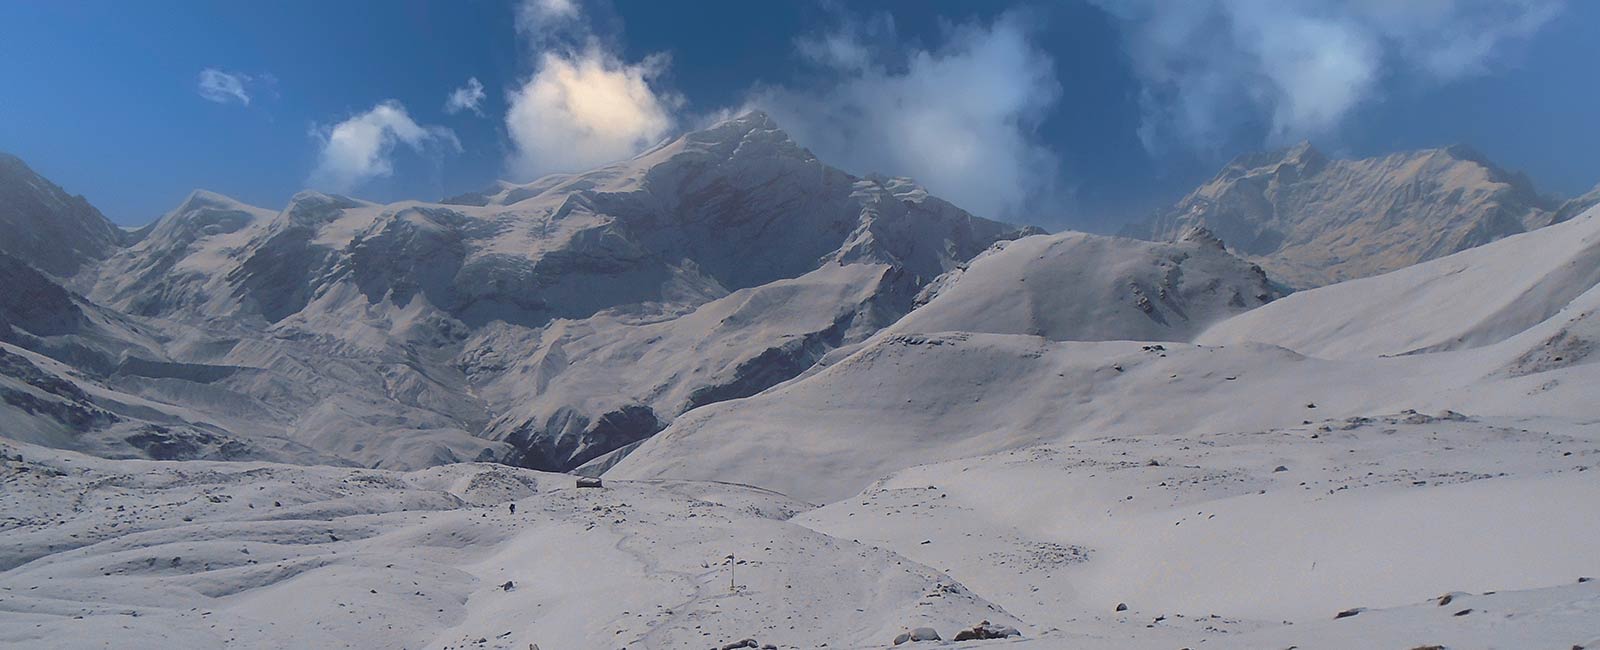 annapurna region in nepal